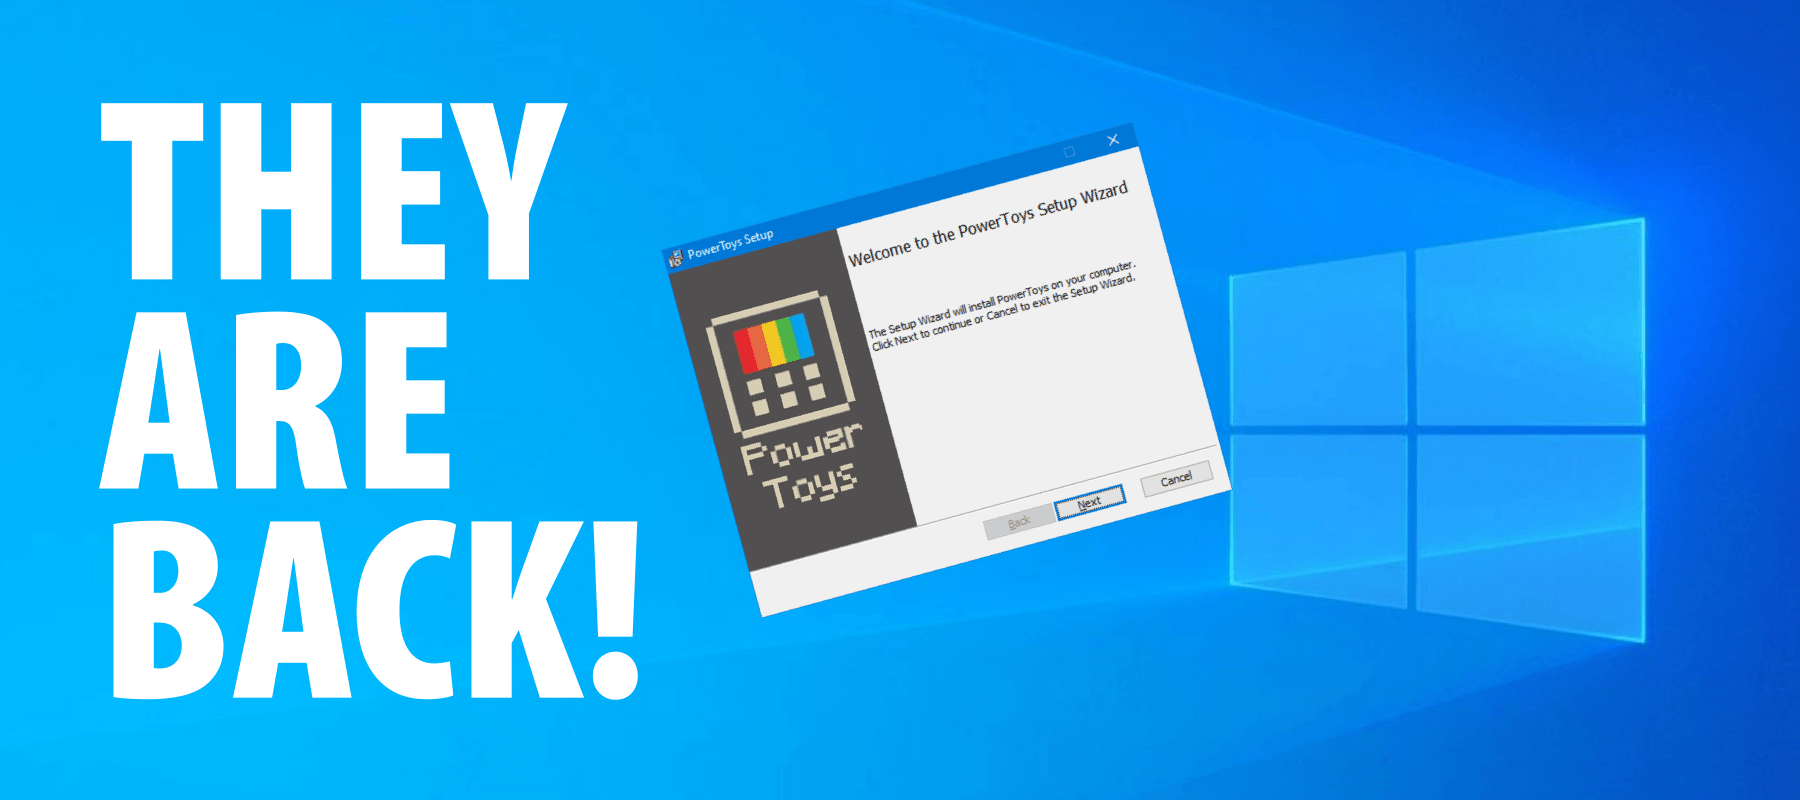 Microsoft PowerToys are Back! - Signa